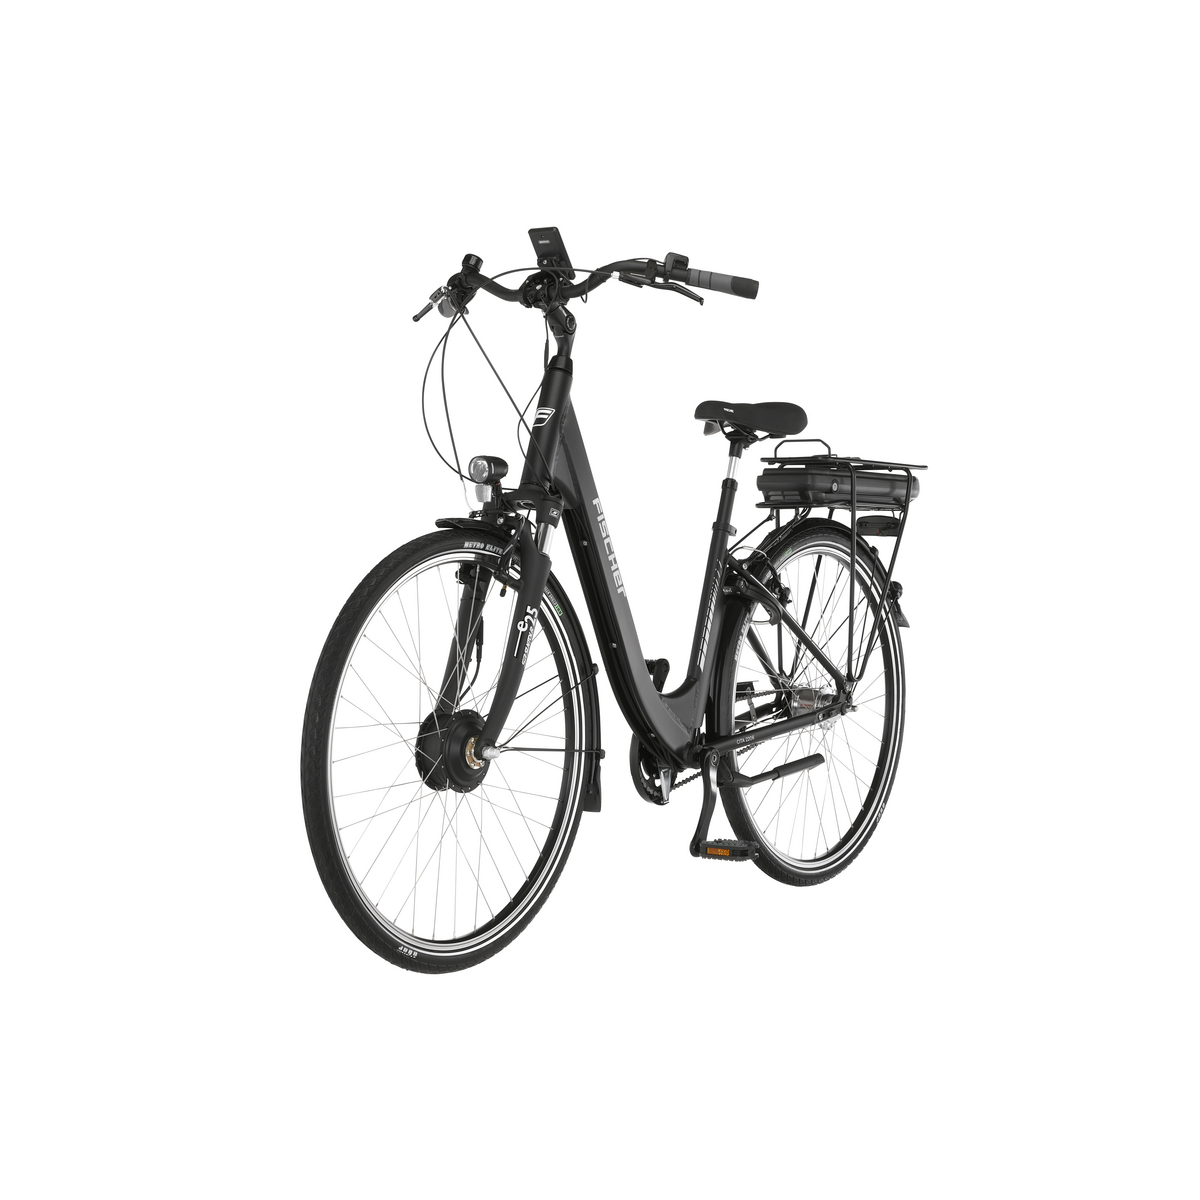 Outlet 44 | | | schwarz 28 Zoll, 522 E-Bike CITA City - E-Bikes cm, Outlet Outlet E-Bikes | - FISCHER RH Sale% 2206 Wh City Generalüberholt ECU matt,